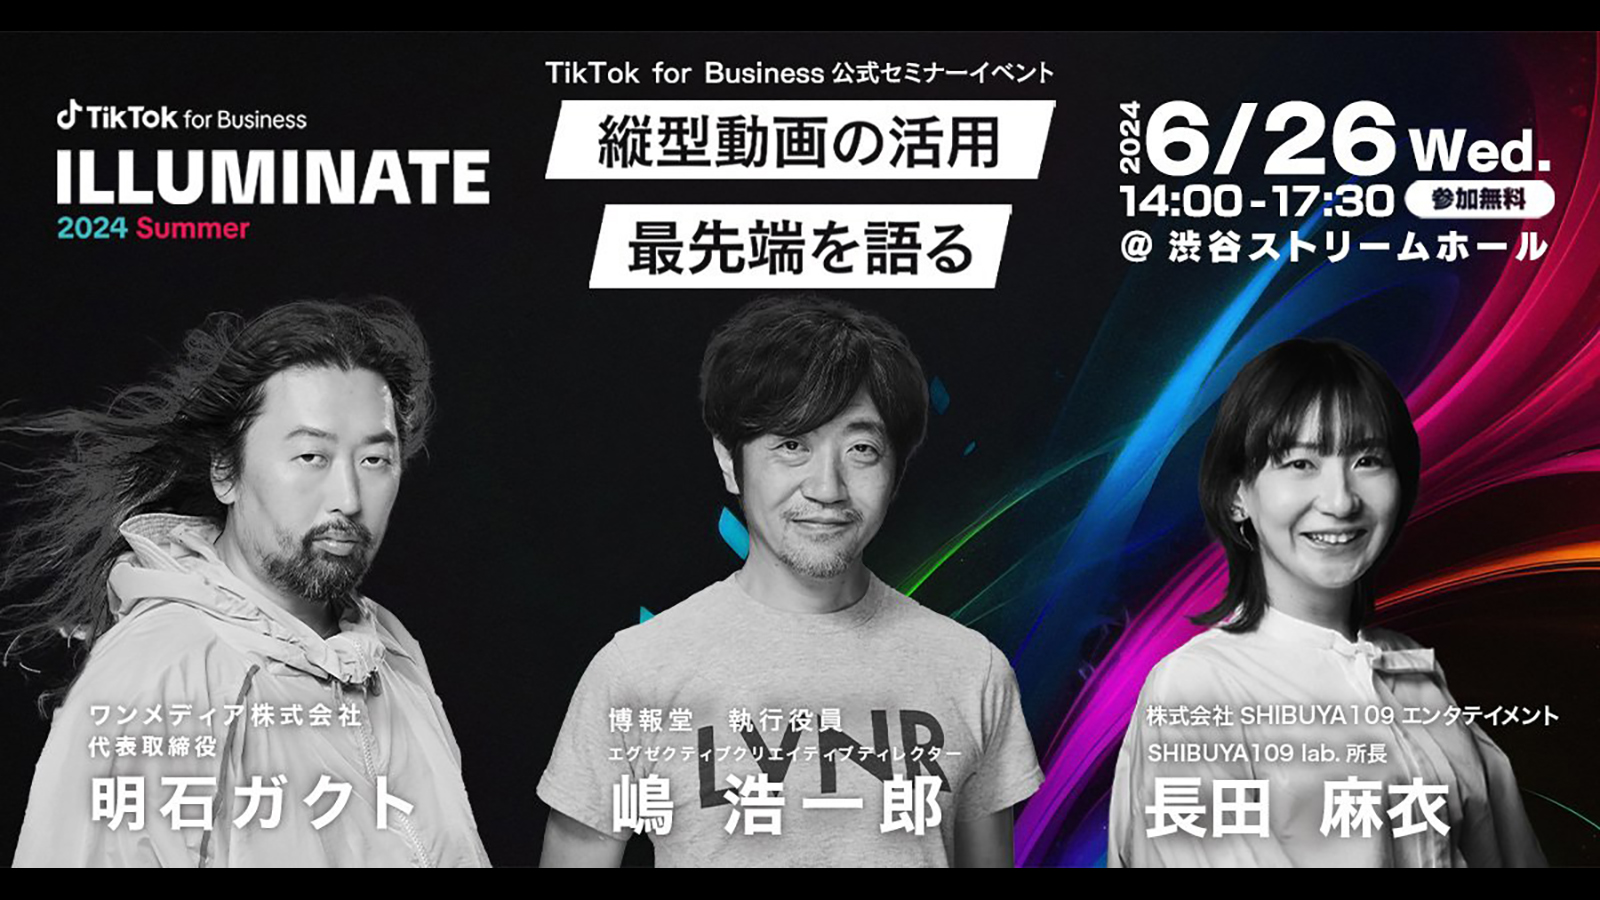 TikTok for Business Japan 主催「ILLUMINATE 2024 Summer」登壇のお知らせの画像